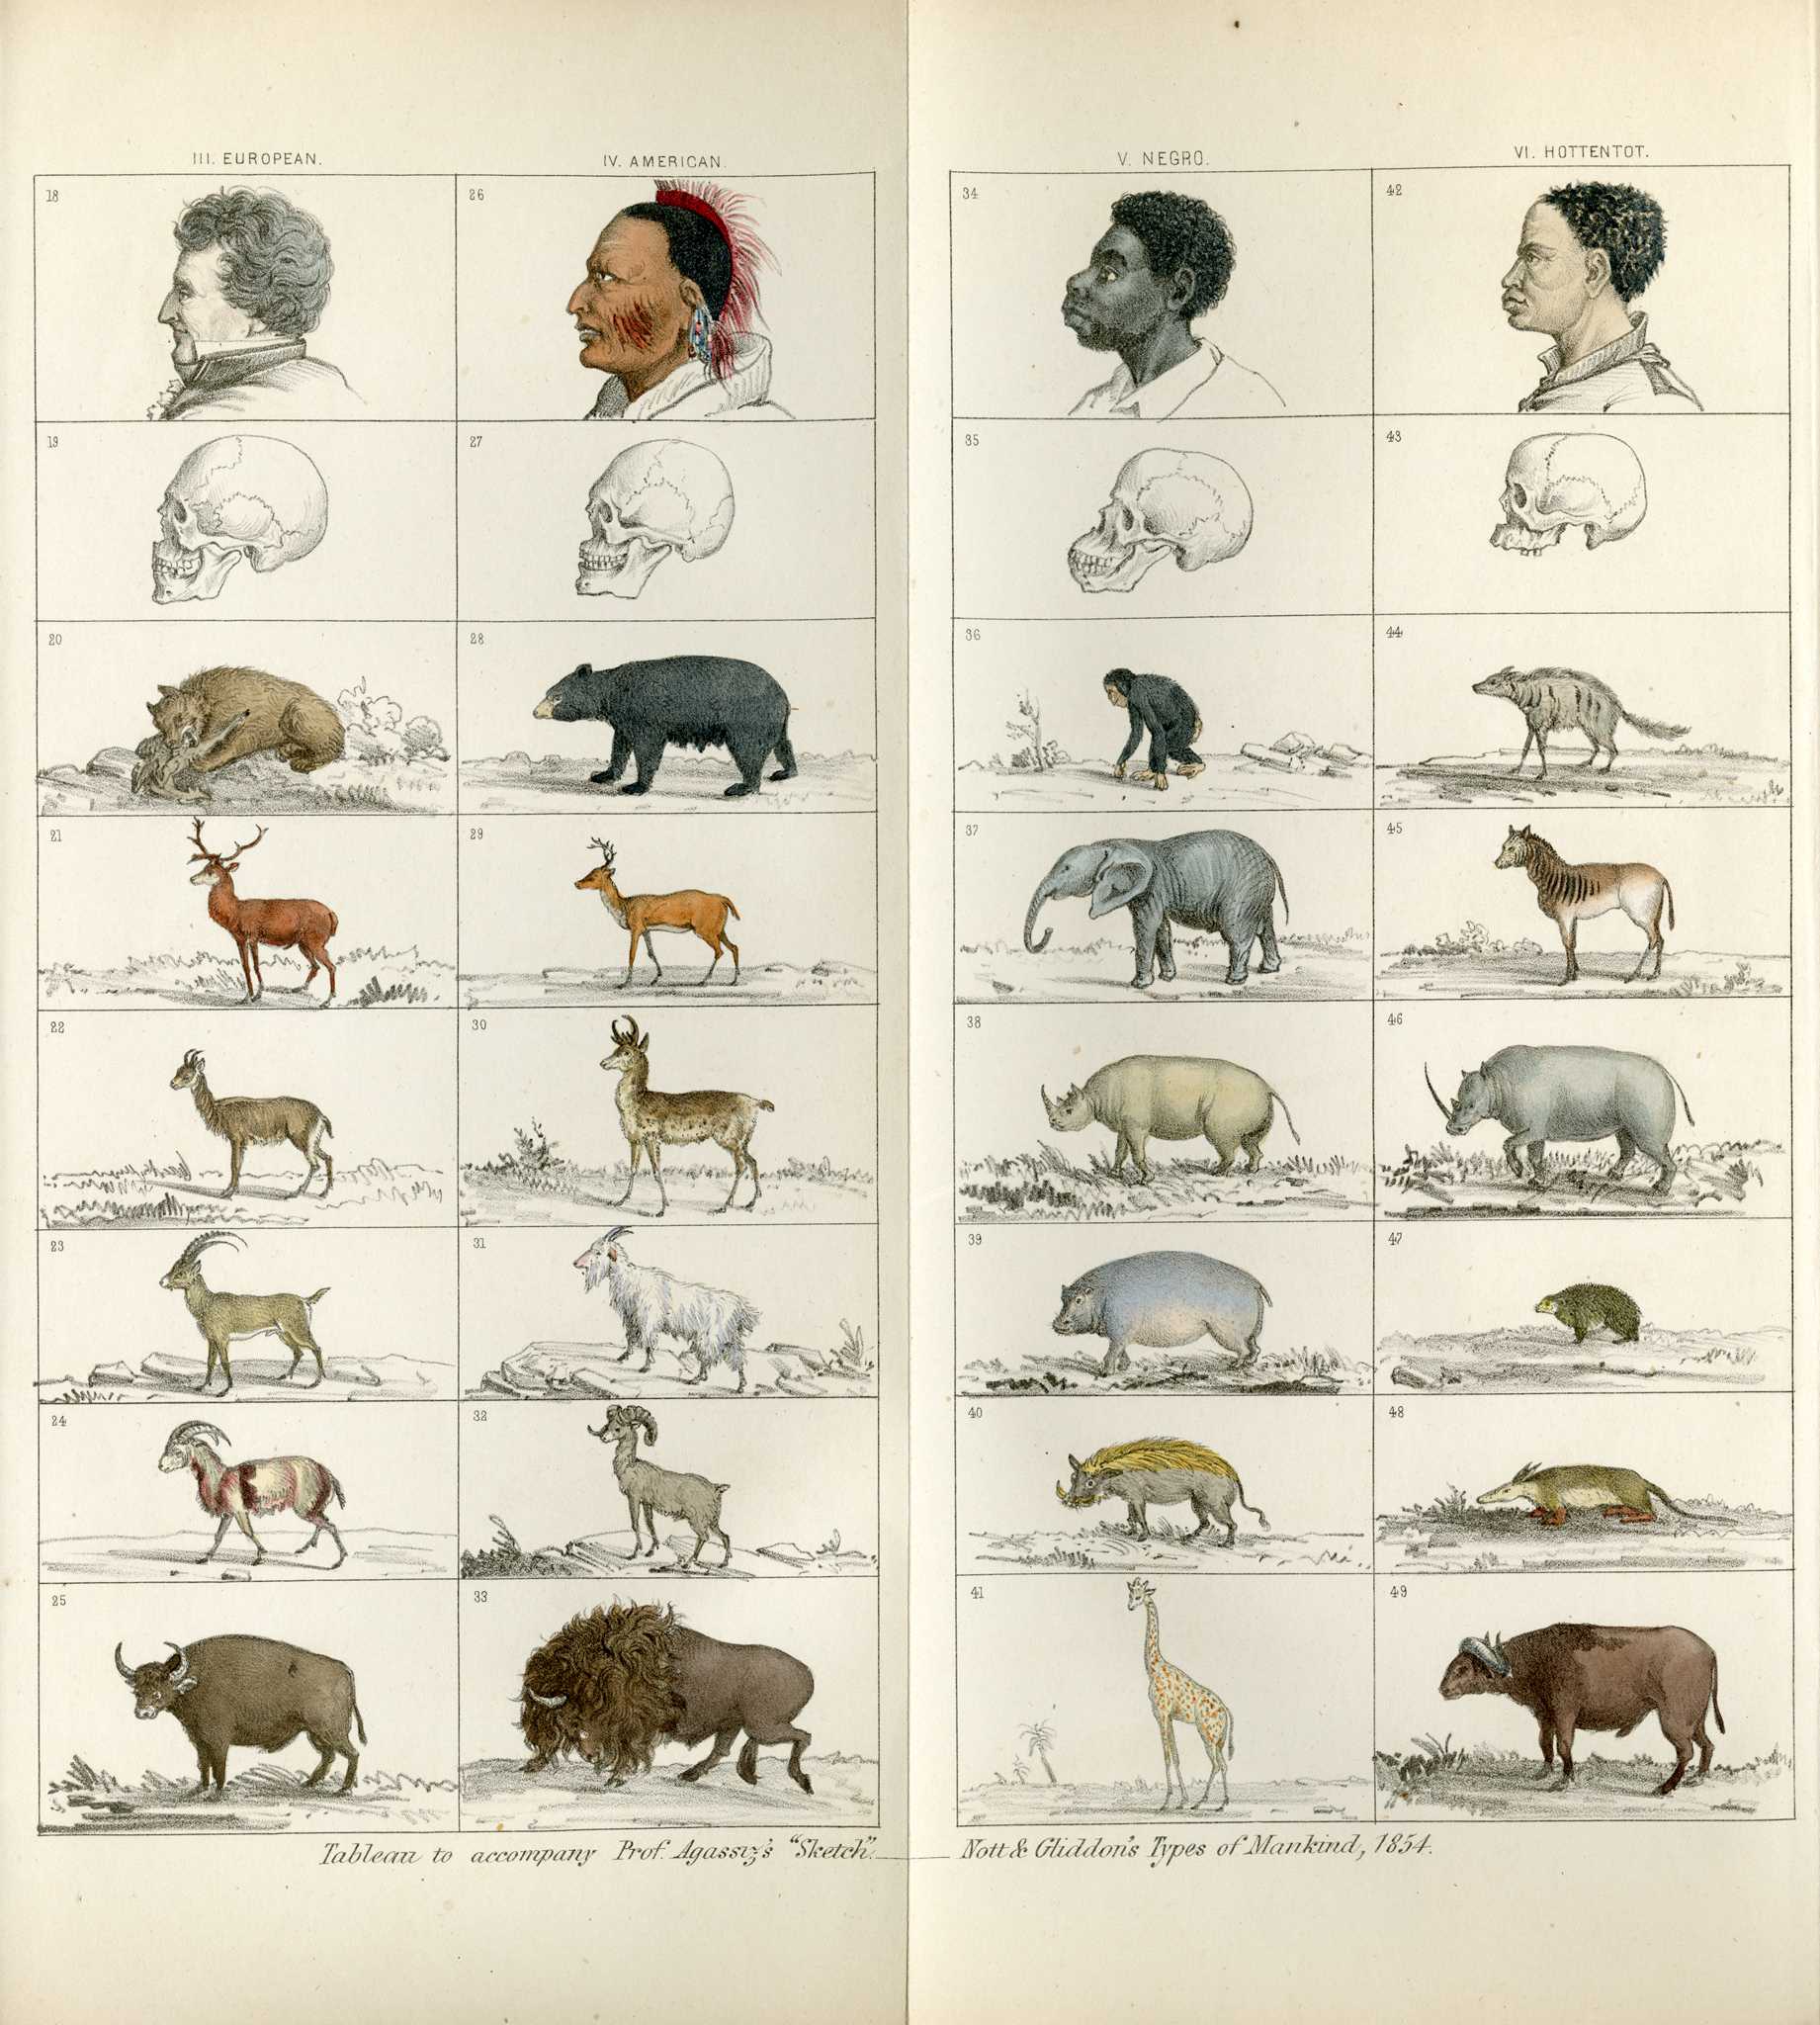 Illustrations of 19th Century Racist Depiction of Human Origins